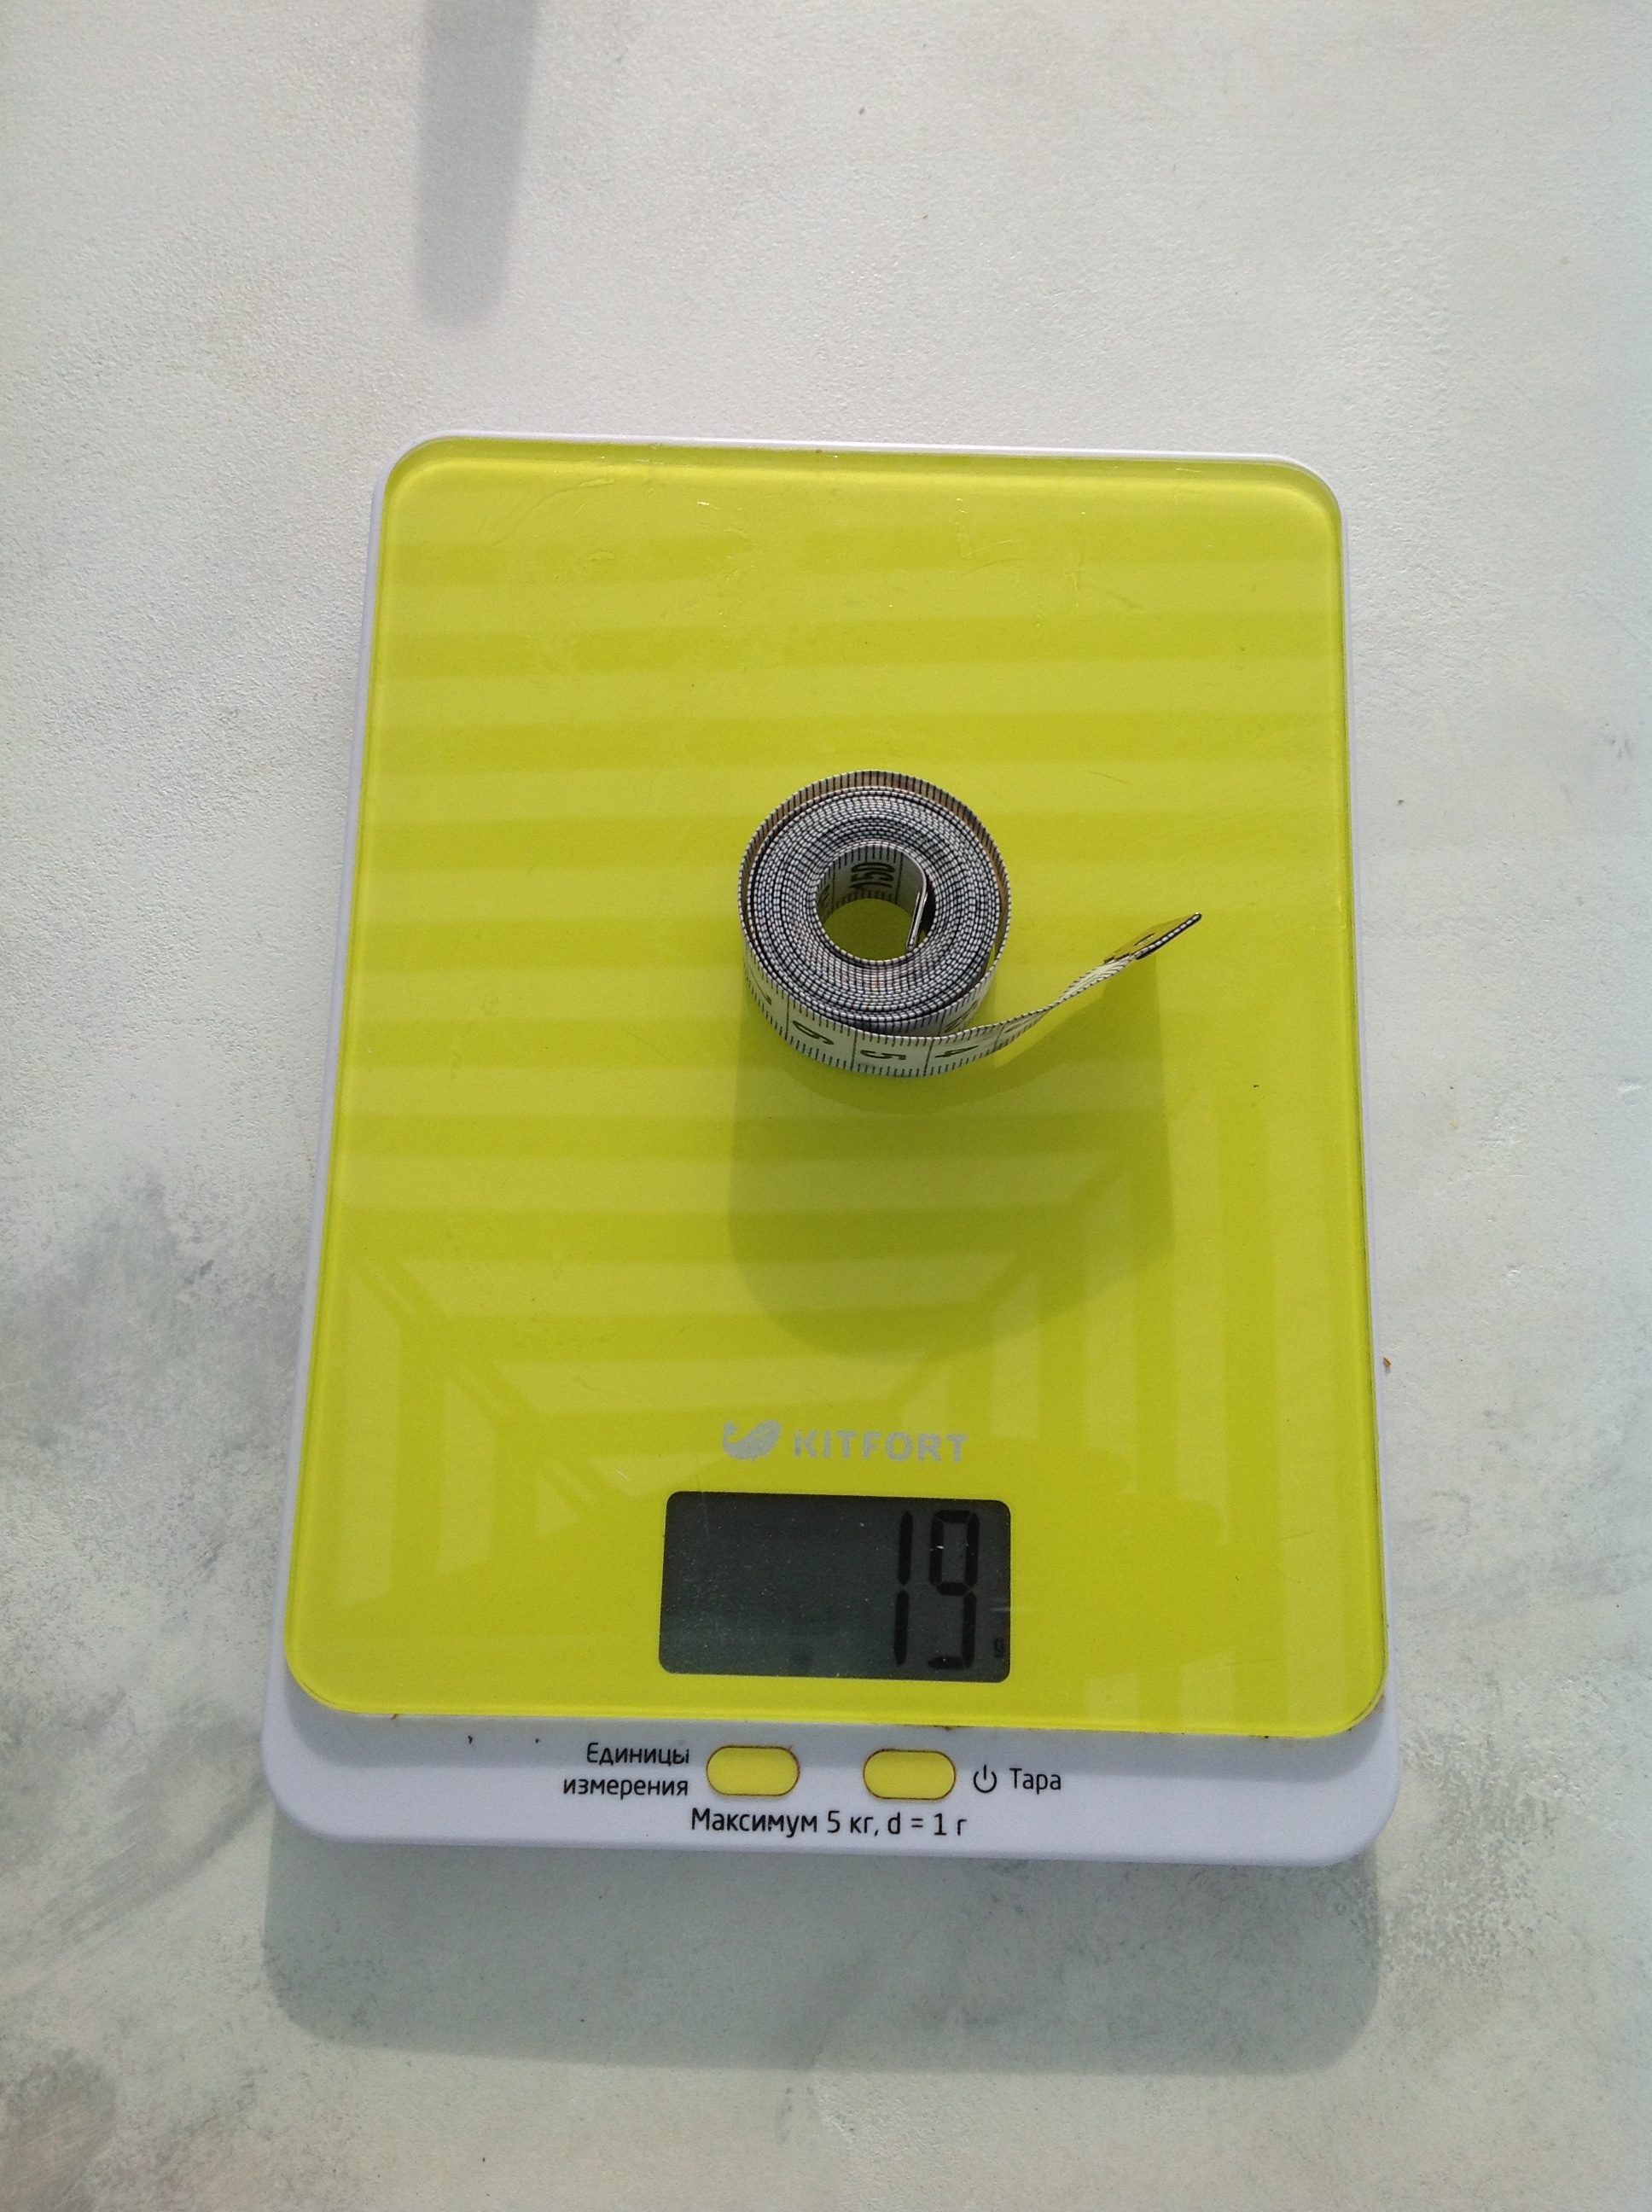 measuring tape weight